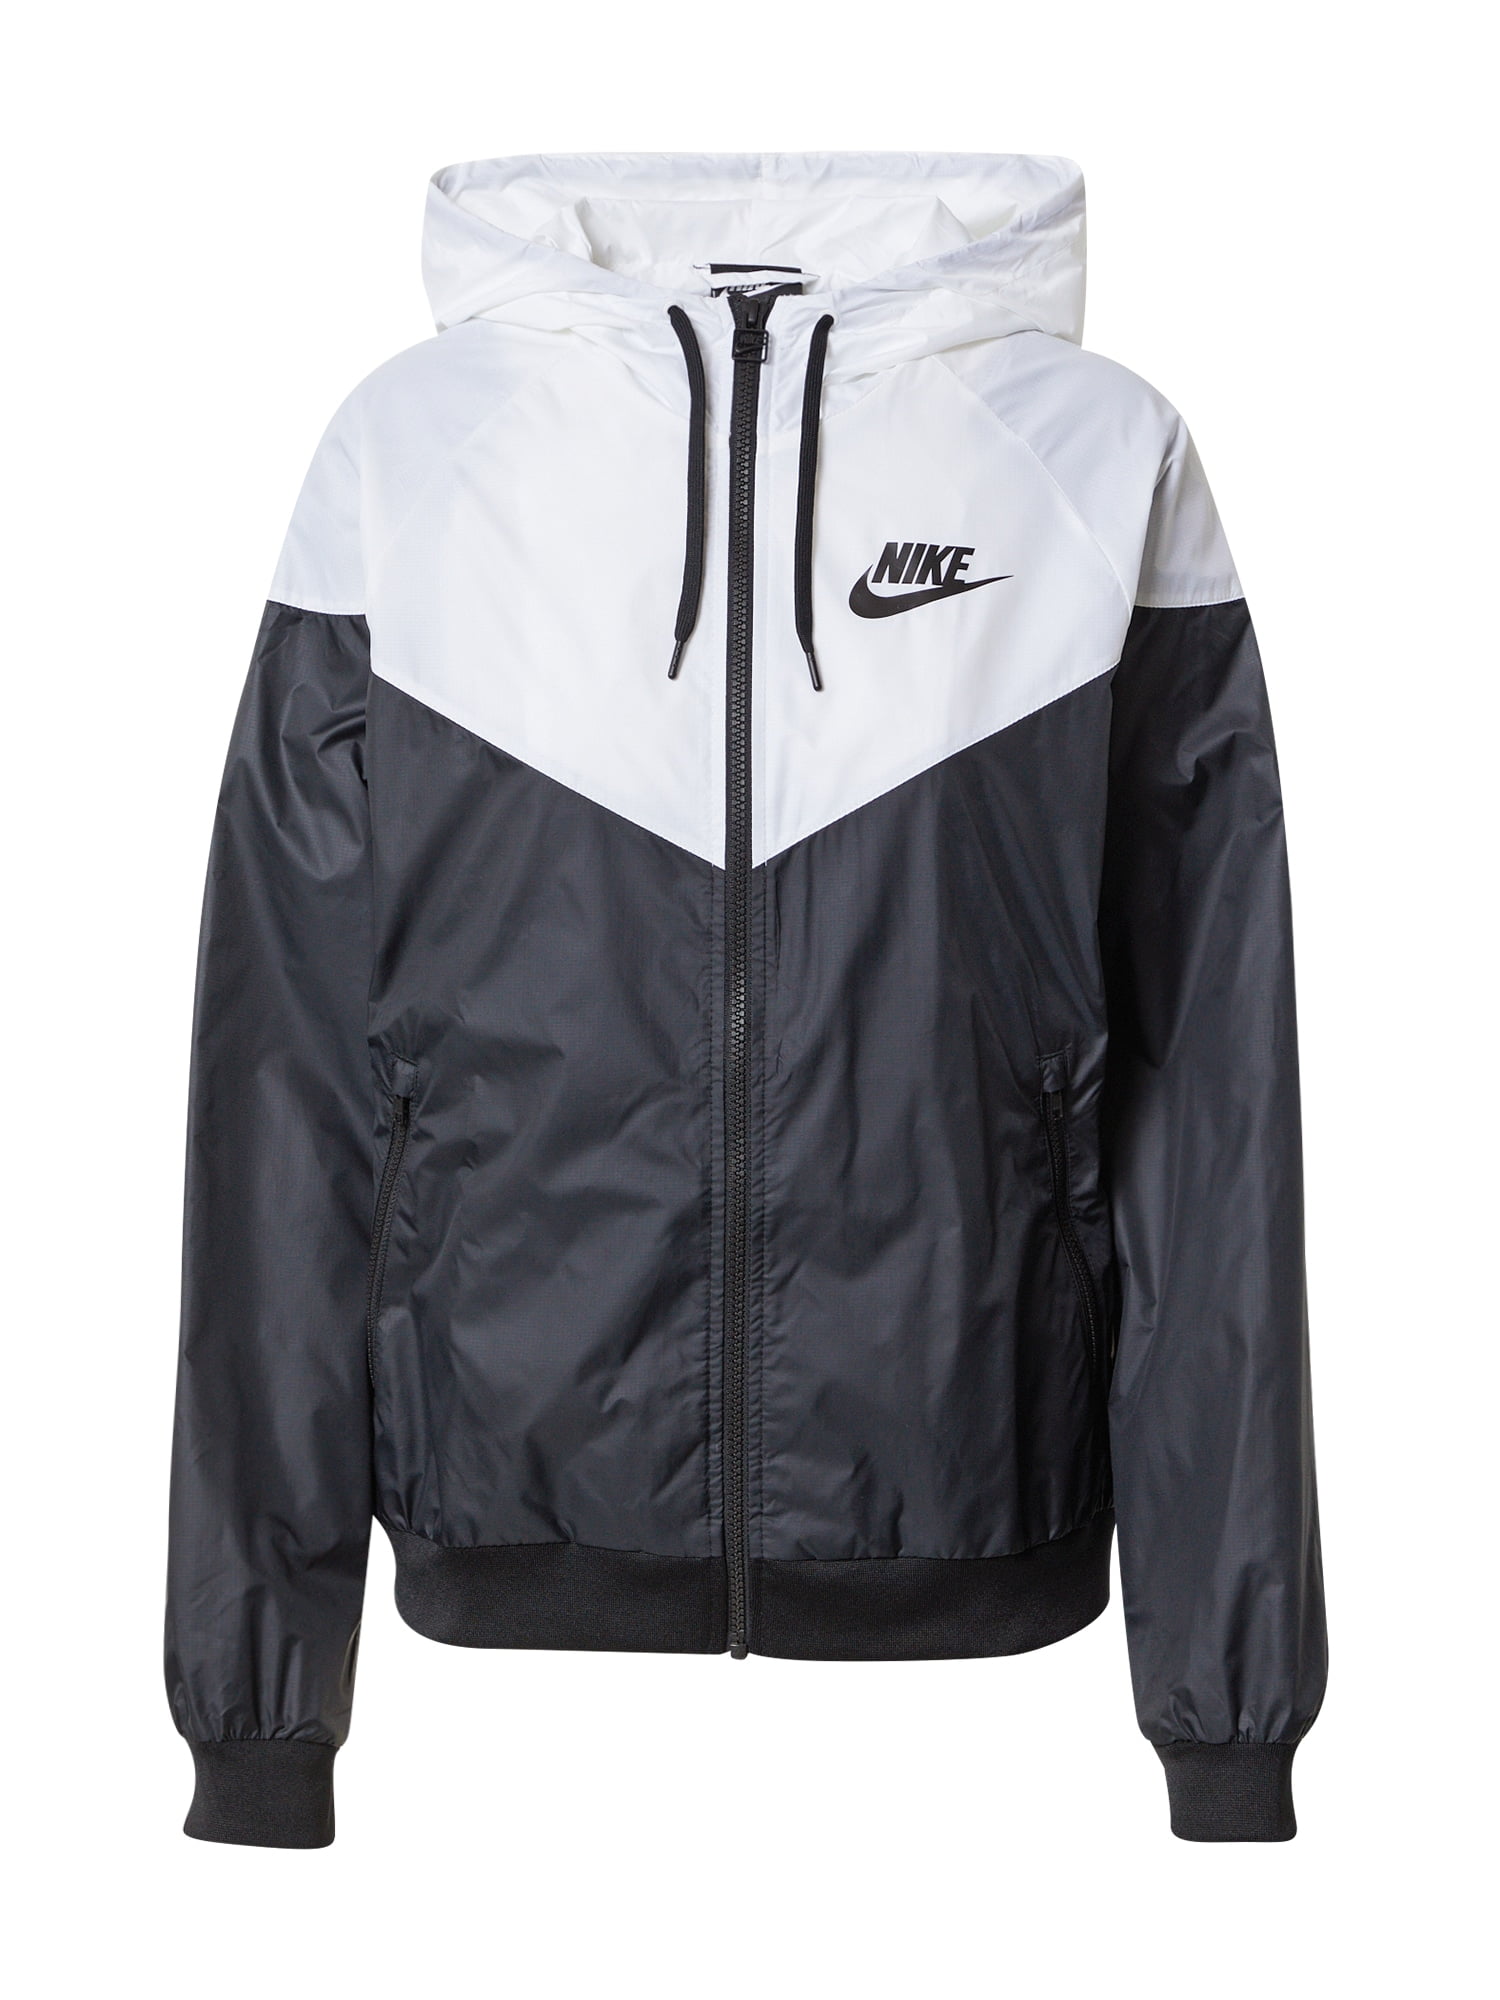 Nike Women's Sportswear Wind-runner (Medium, Black/White) - Walmart.com